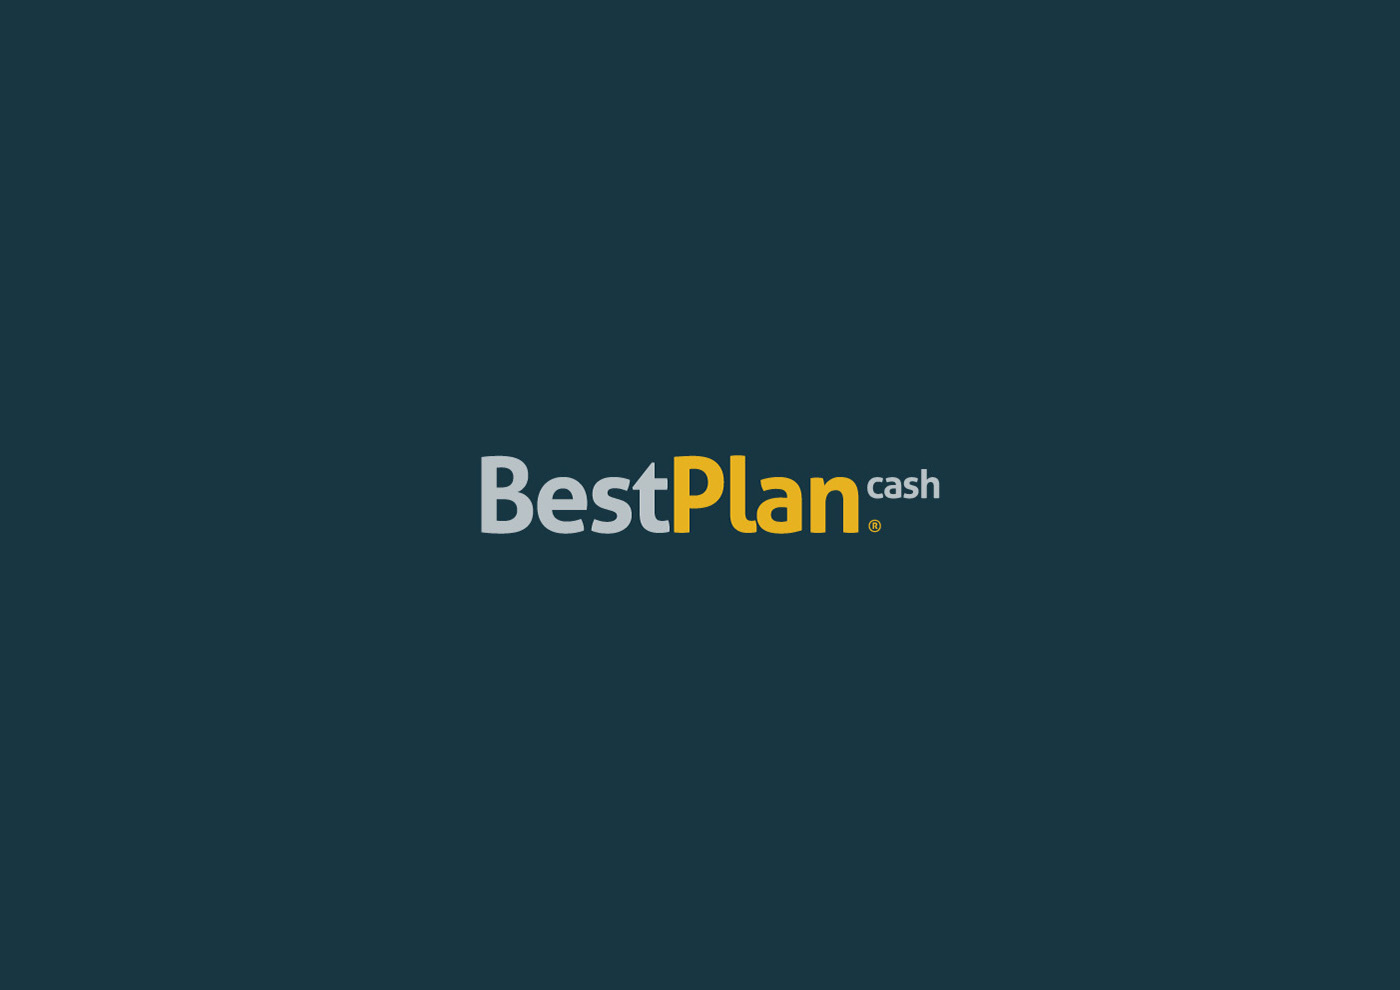 best plan lead best Plan lead brand marca logo save libé cash life shop creative Gustavo campinas